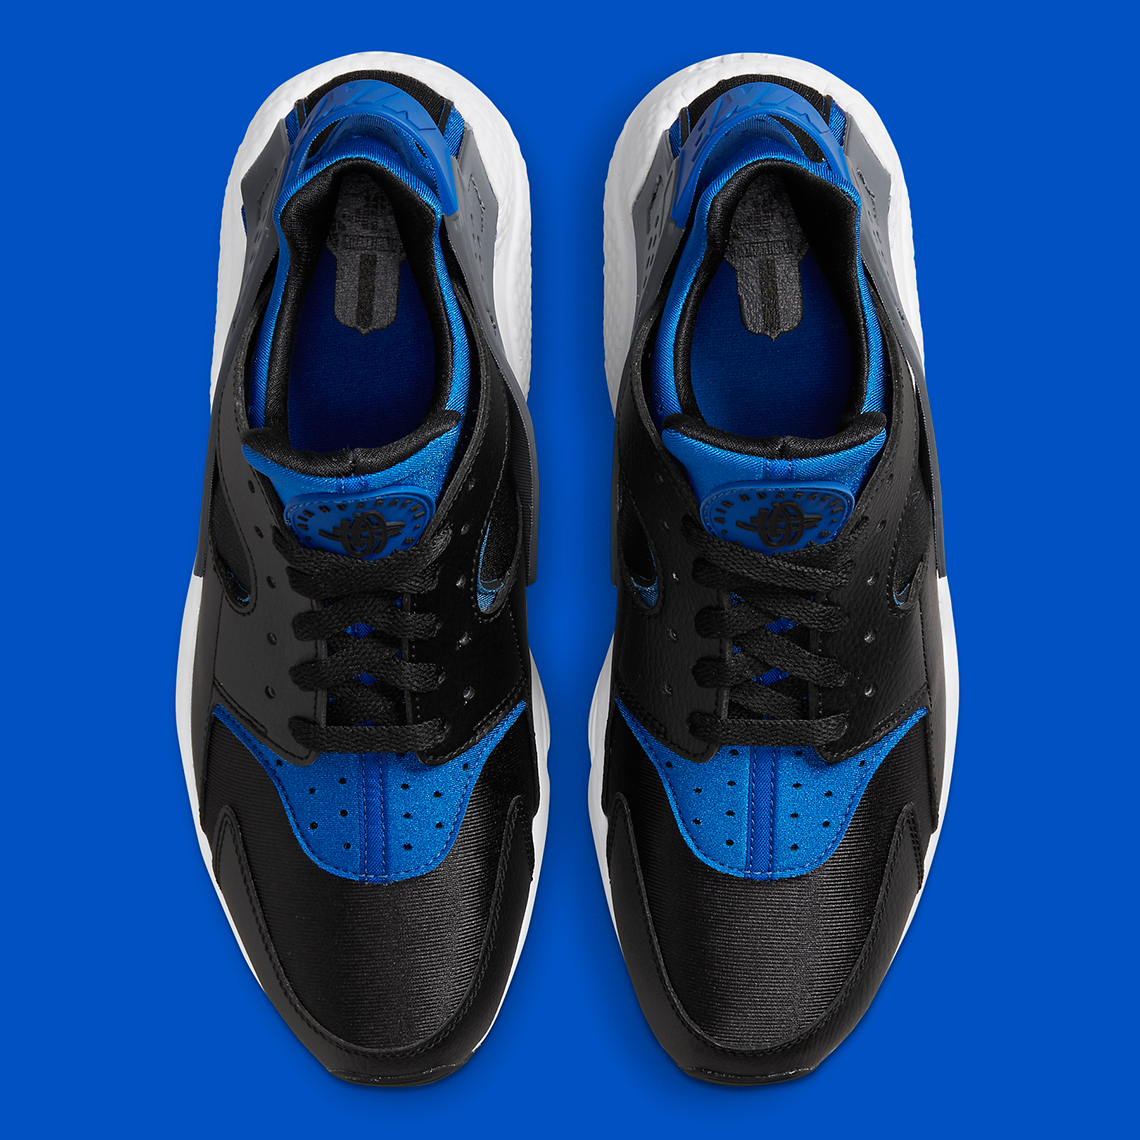 Nike Huarache "Black/Royal" DV6493-001 SneakerNews.com